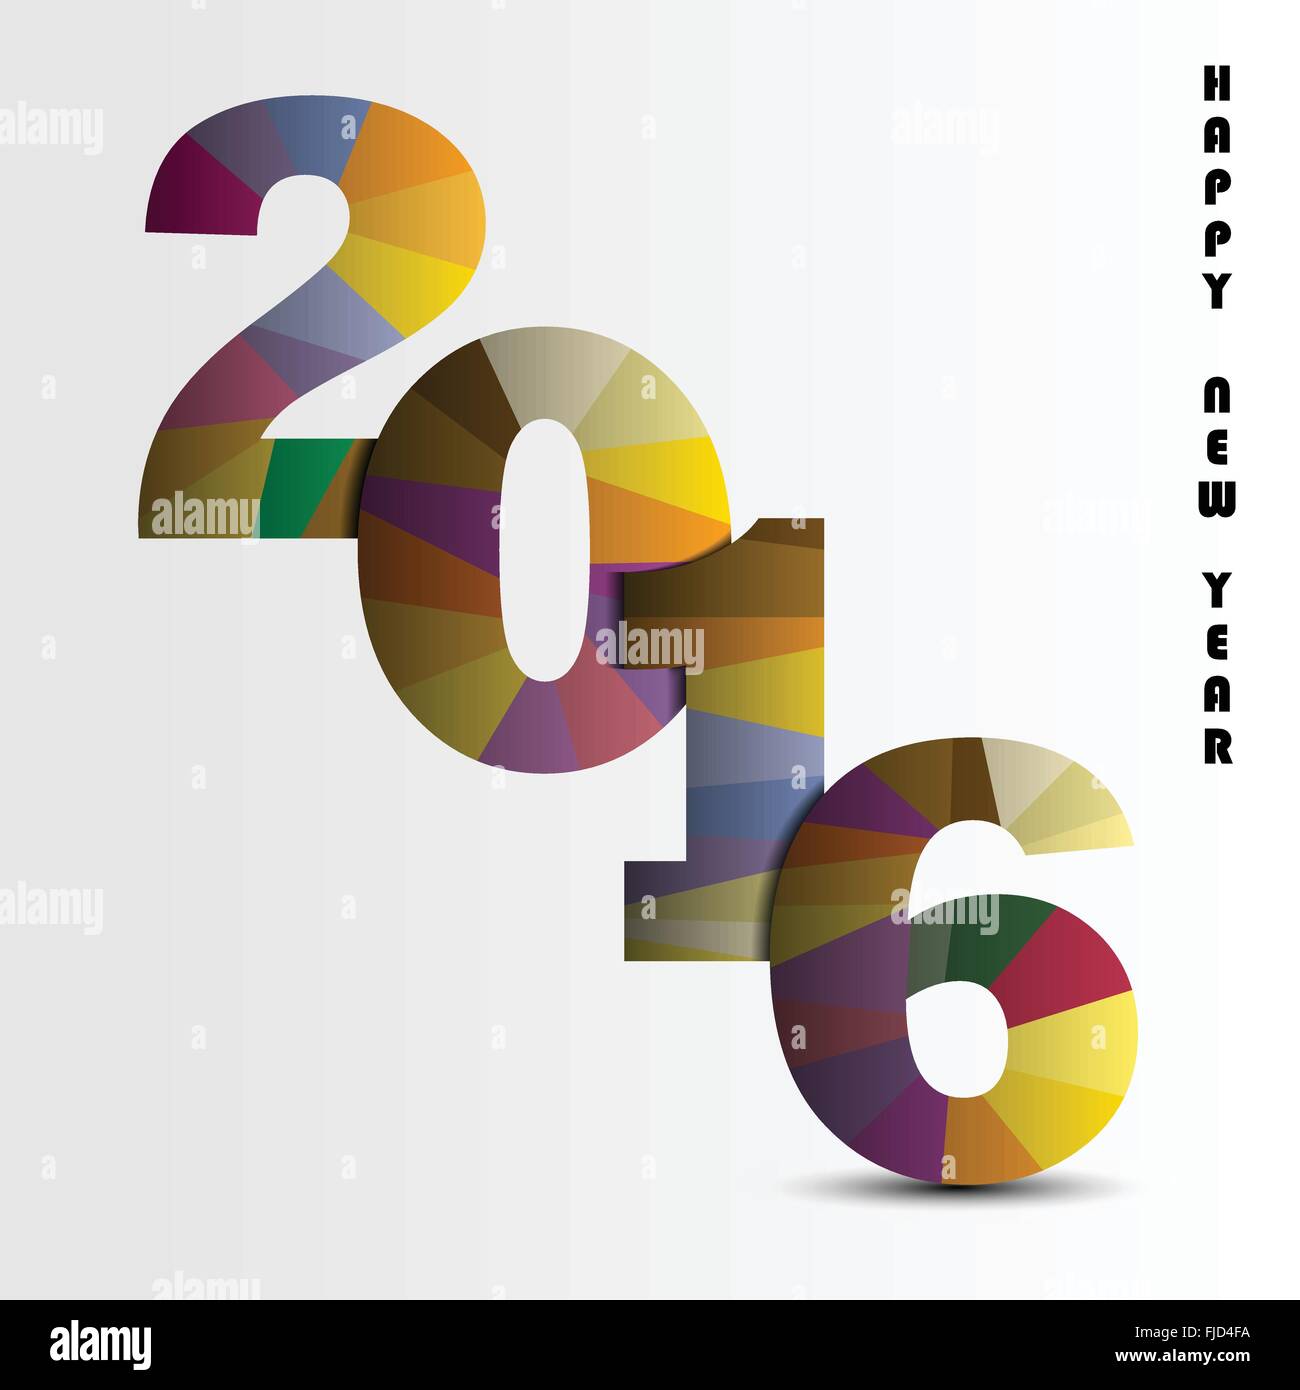 Happy New Year 2016.Colorful Grußkarte Design. Vektor-Illustration für Ferien-Design. Party Plakat, Grußkarte Stock Vektor